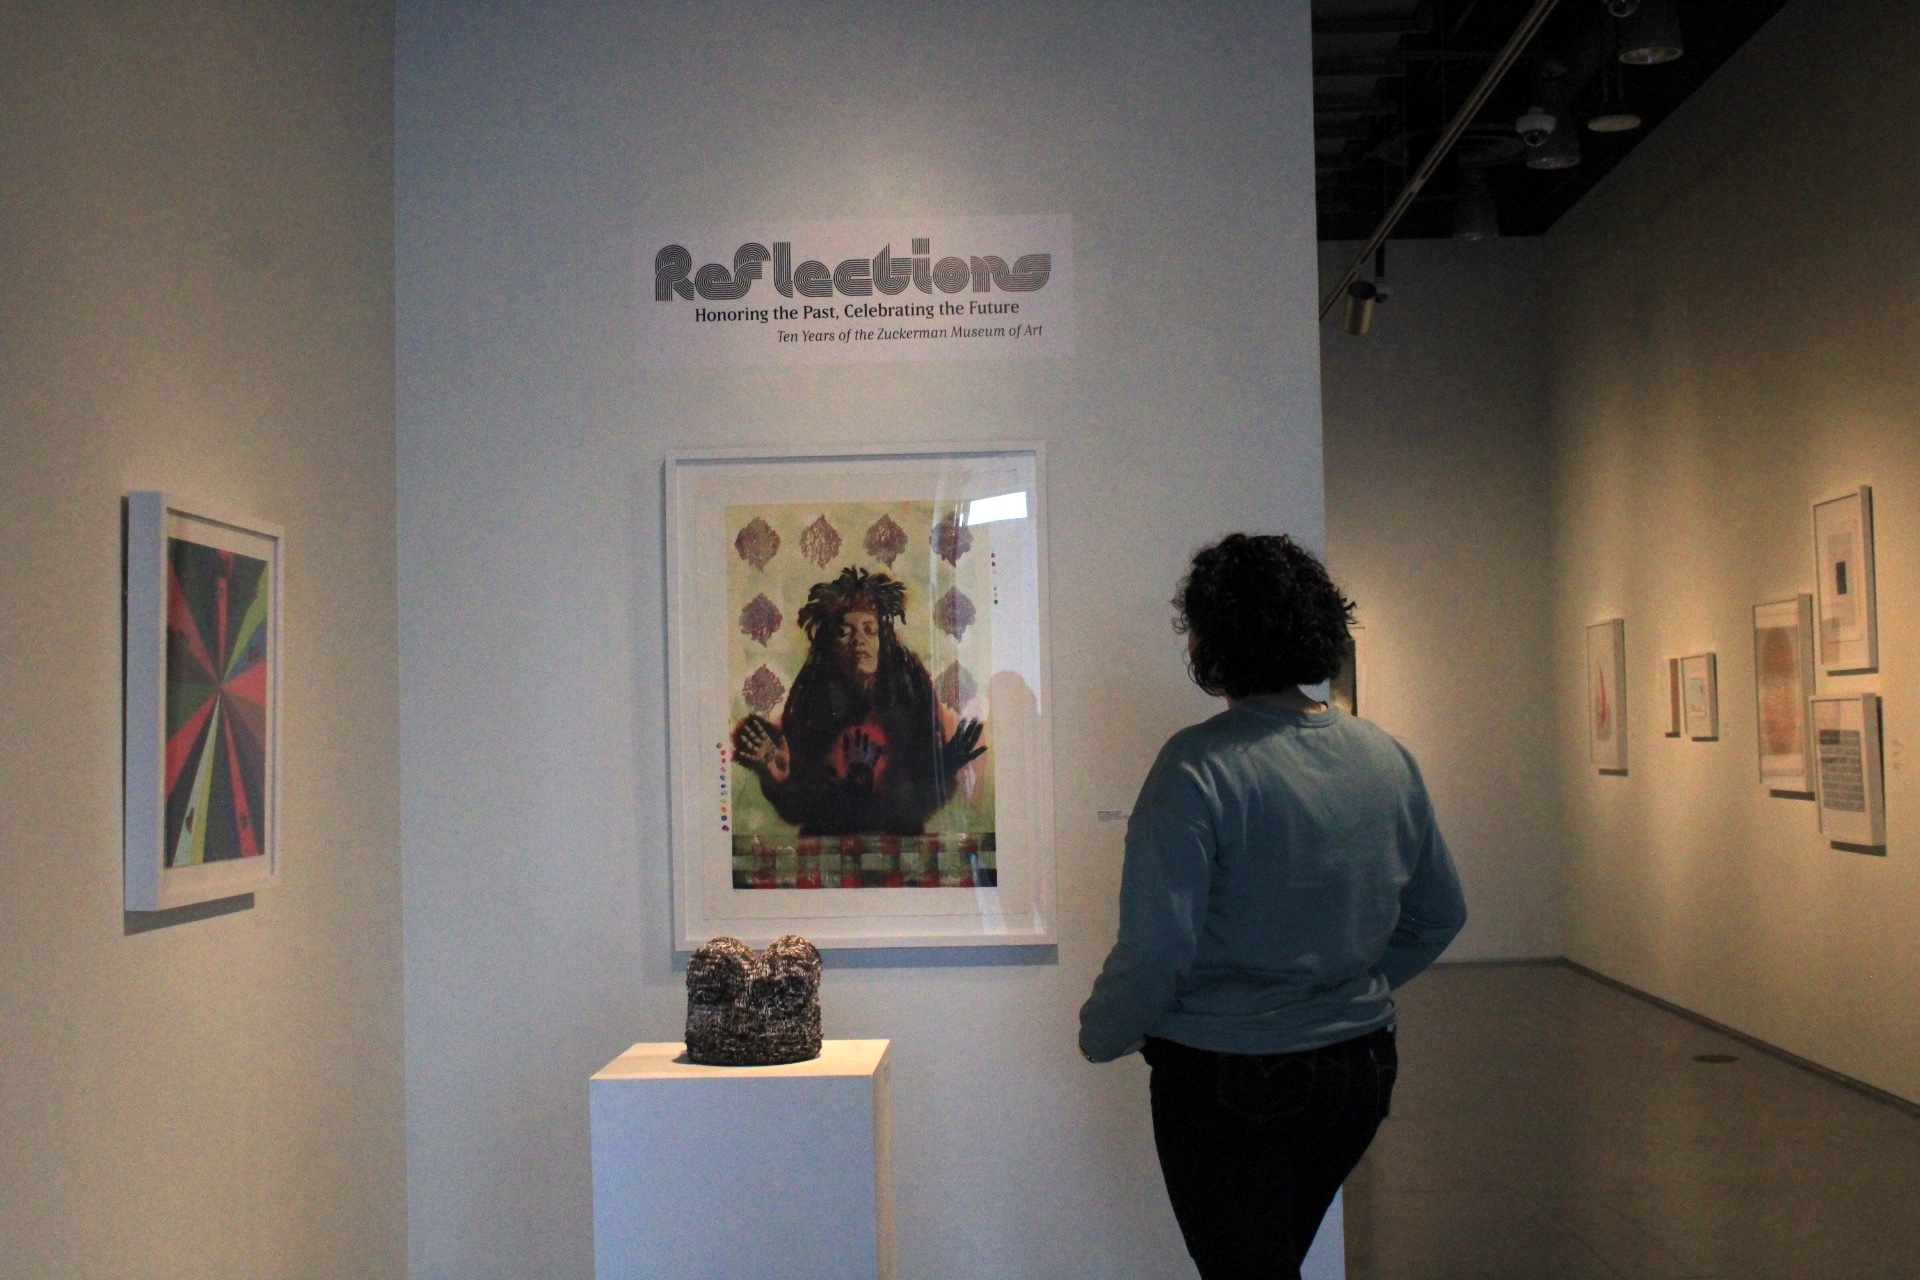 KSU student Caitlyn David admiring the work in the Reflections exhibit.